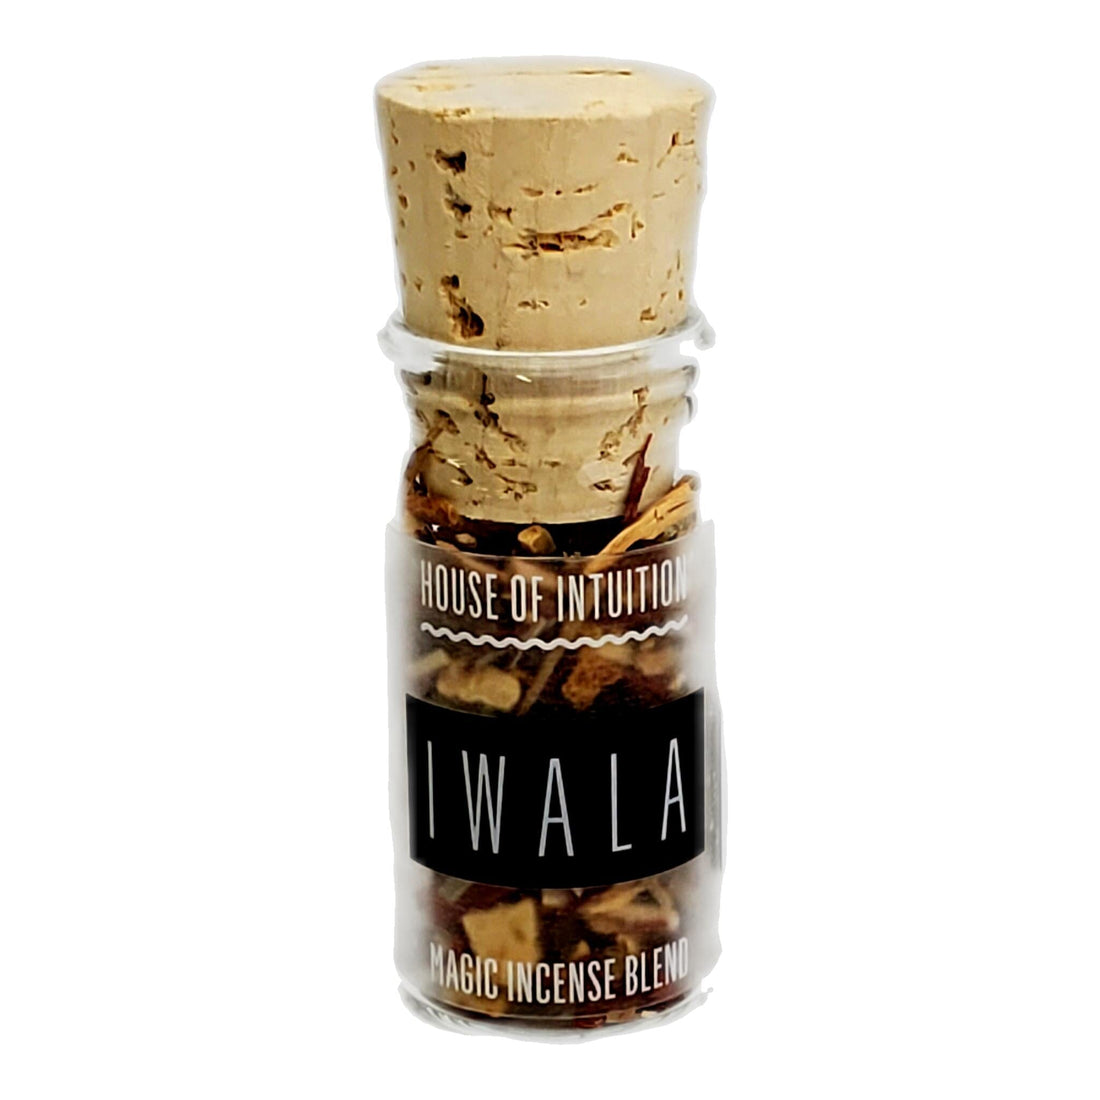 Iwala Magic Incense Blend (Healing) "Glass Jar" Incense & Holders -Incense V50 